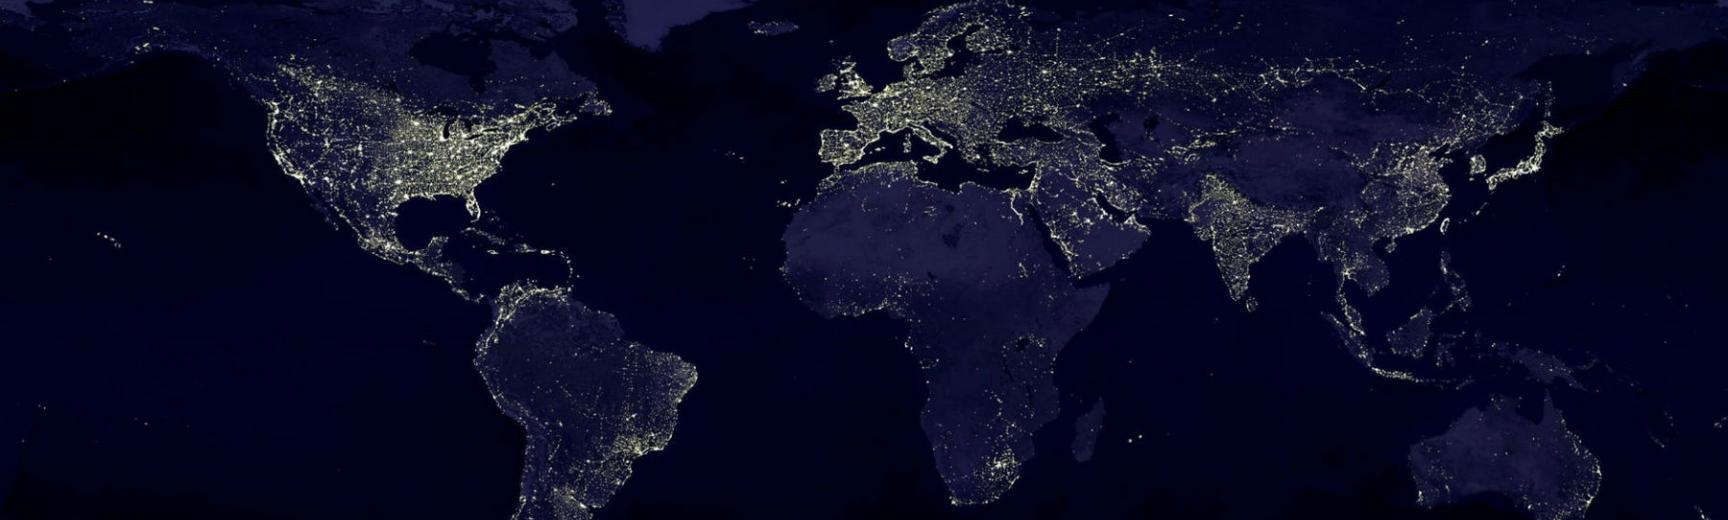 earth earth at night night lights 41949 pexels2